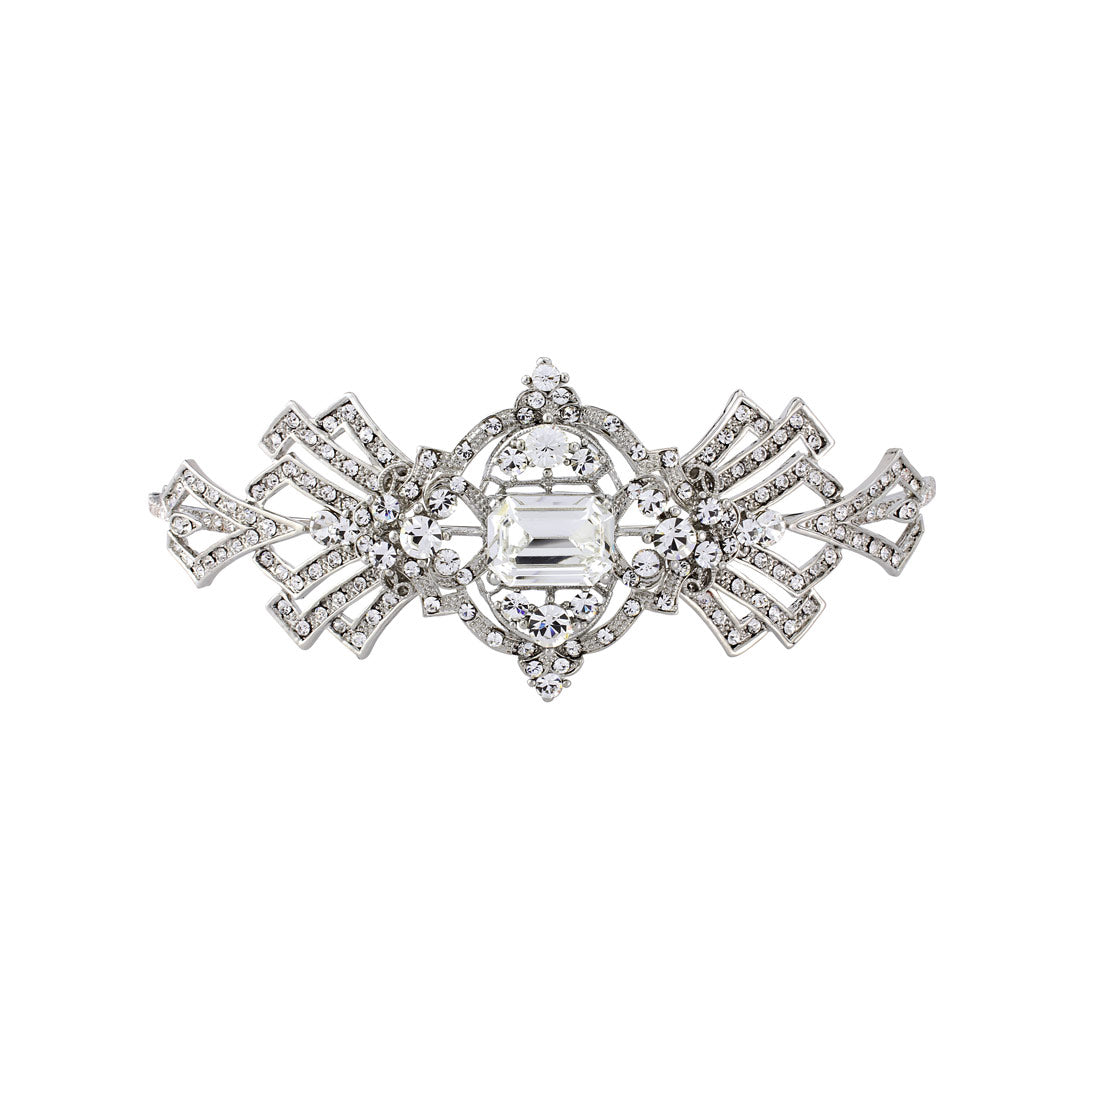 Gatsby Beauty Art Deco Vintage Style Wedding Tiara